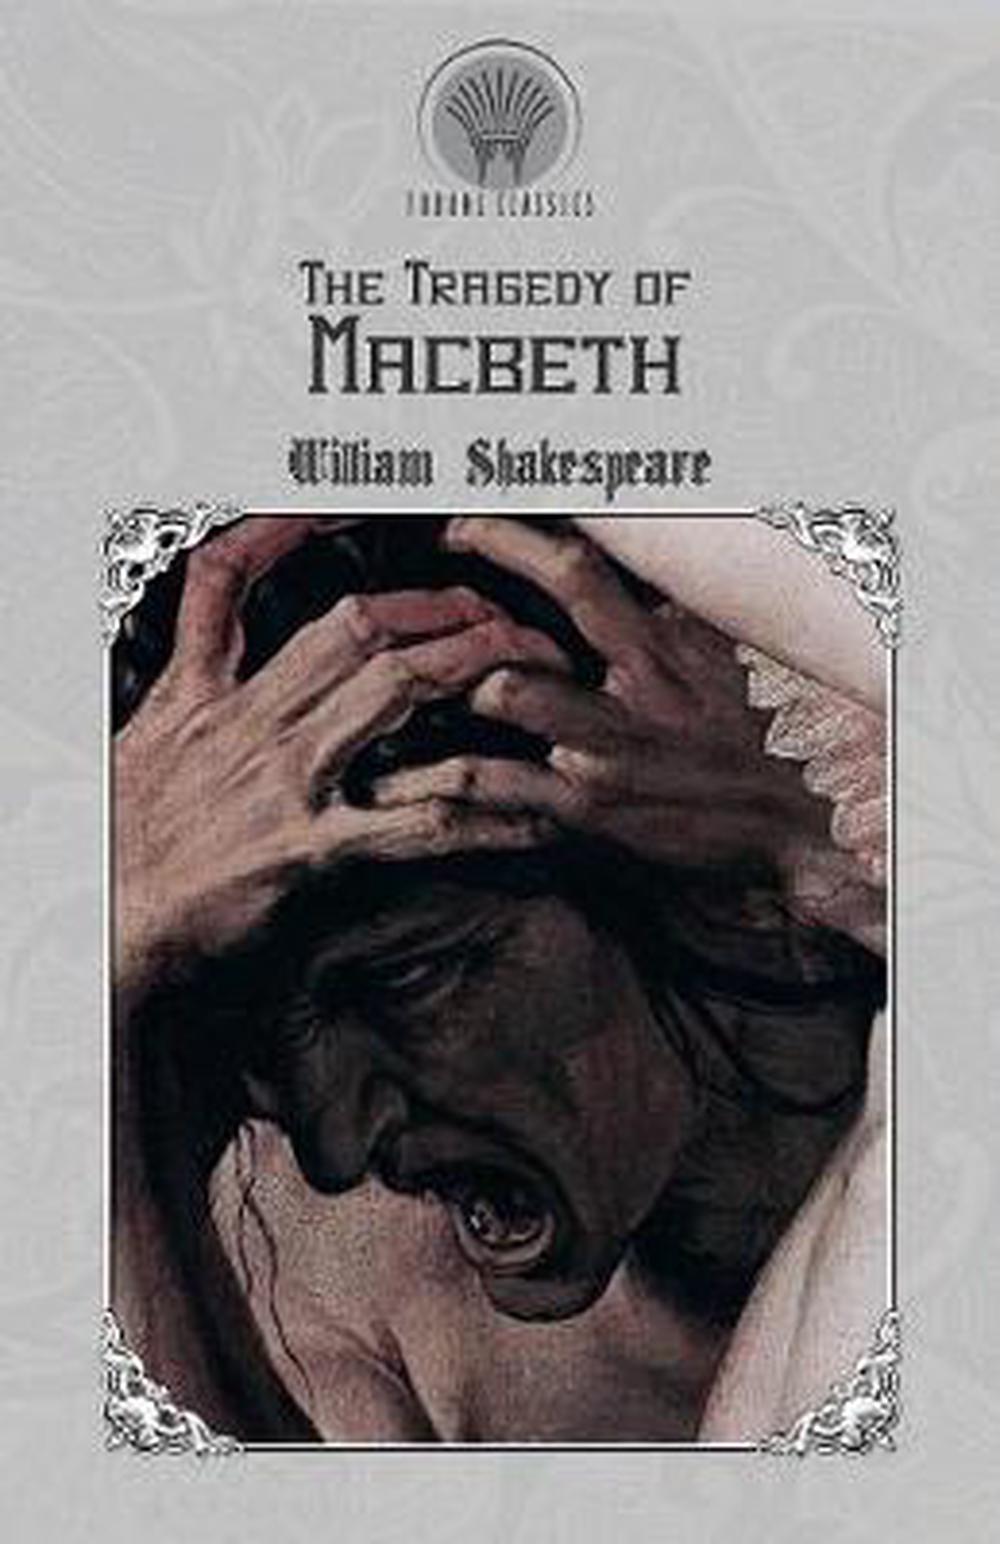 macbeth play written by william shakespeare